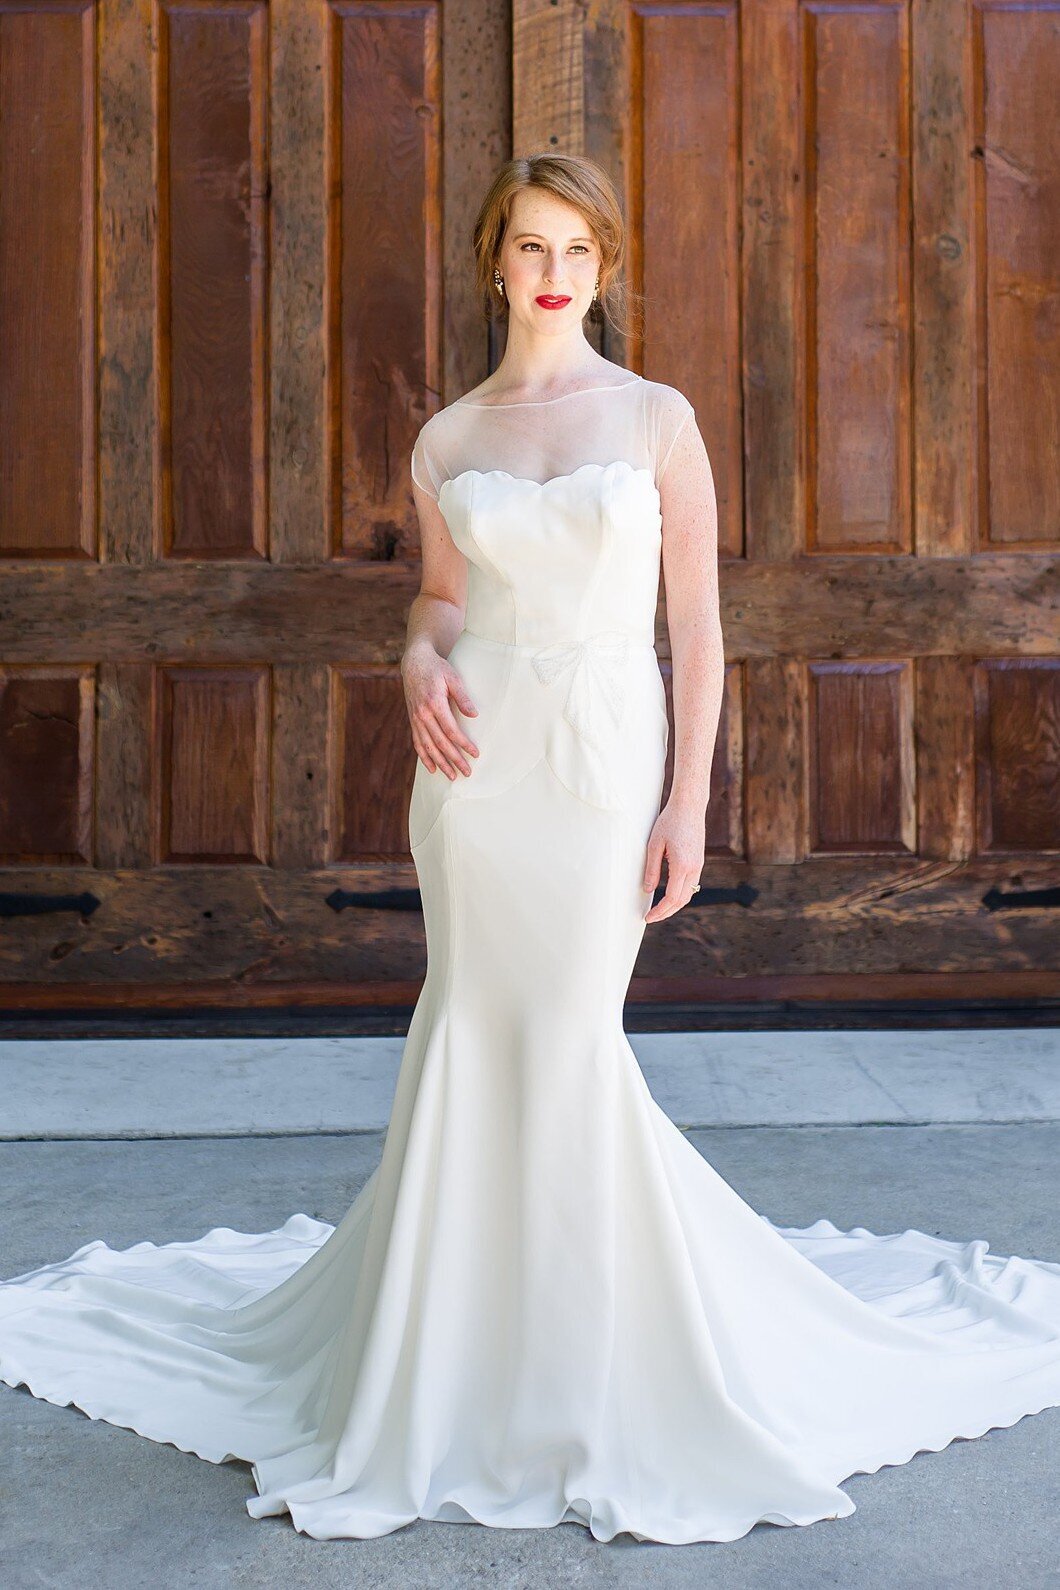 Zara is a mermaid crepe wedding gown with an illusion neckline by Charleston bridal designer Edith Elan.